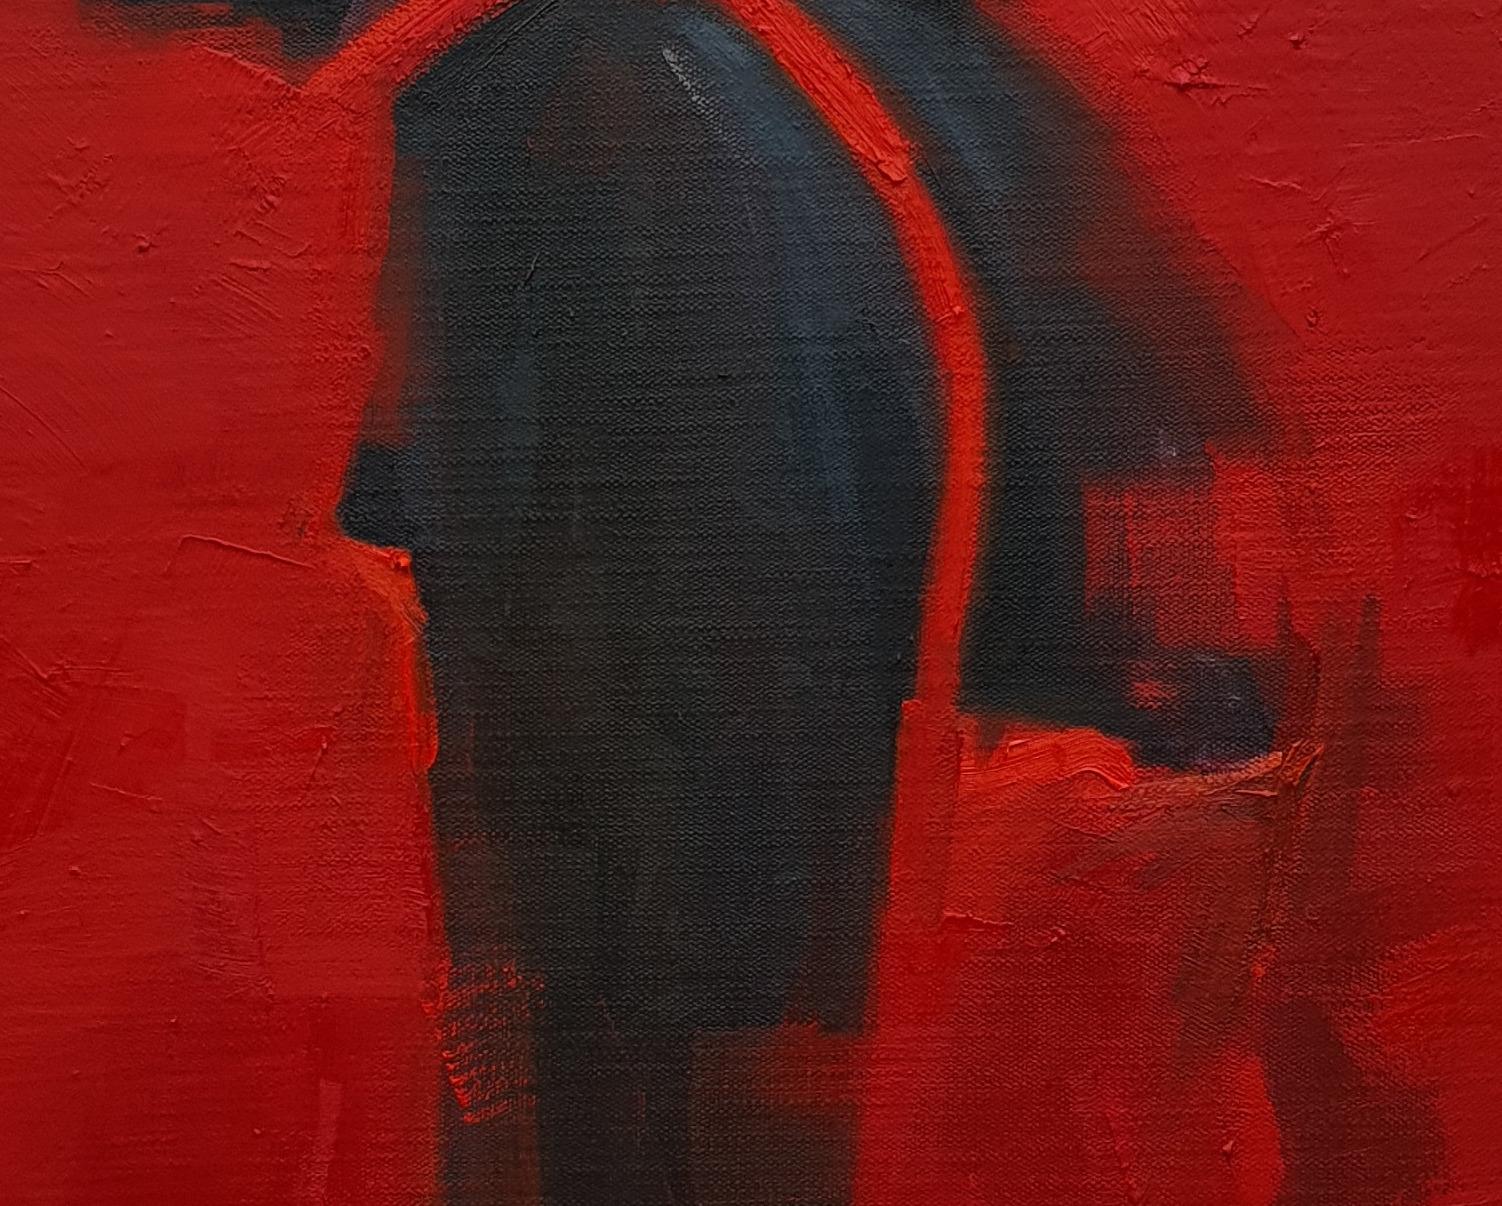 Solace IV - Red Interior Painting by Ajegbomogun Damilola